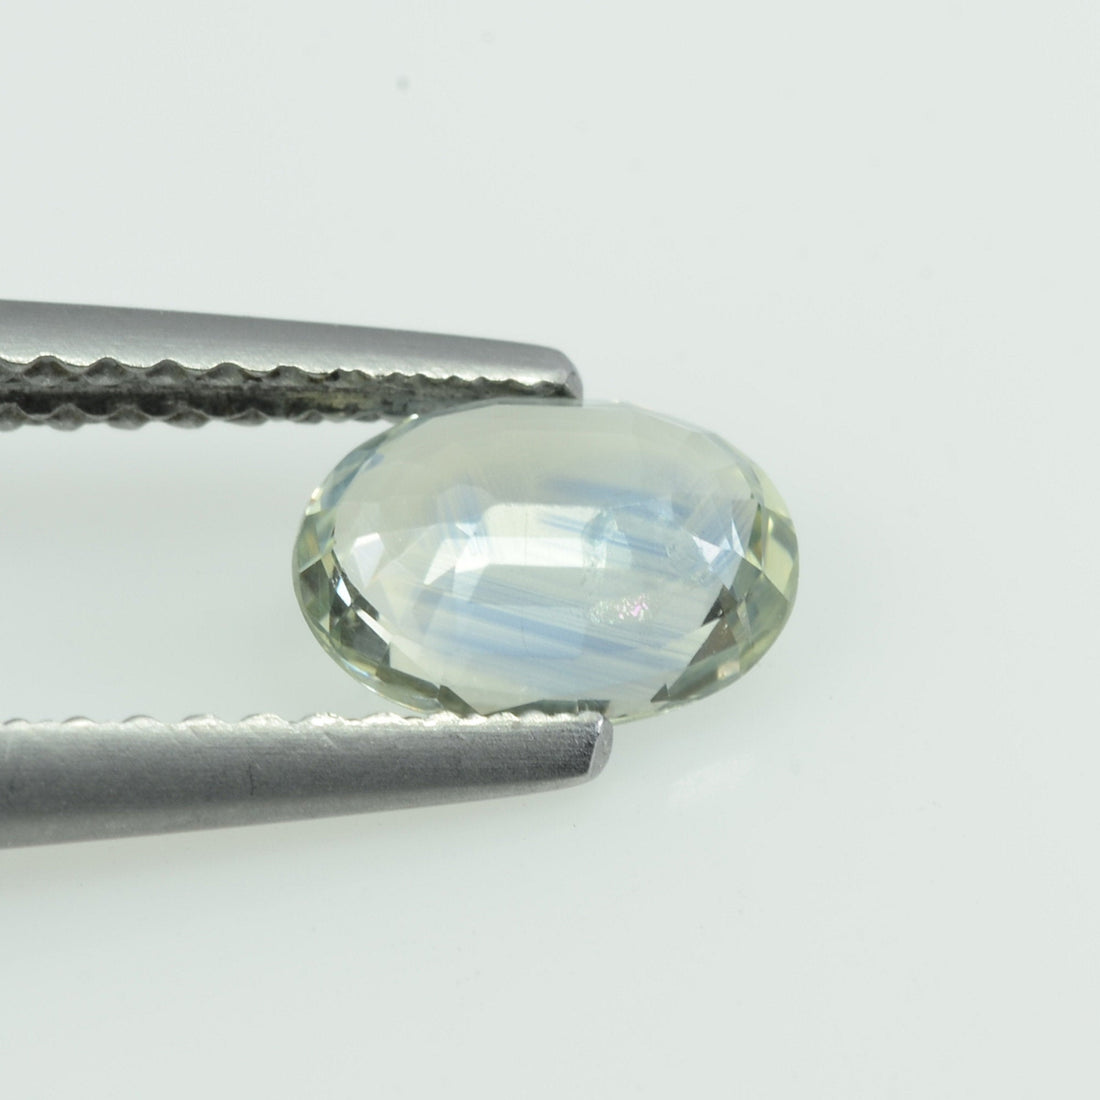 0.94 cts Natural Bi-color Sapphire Loose Gemstone Oval Cut - Thai Gems Export Ltd.